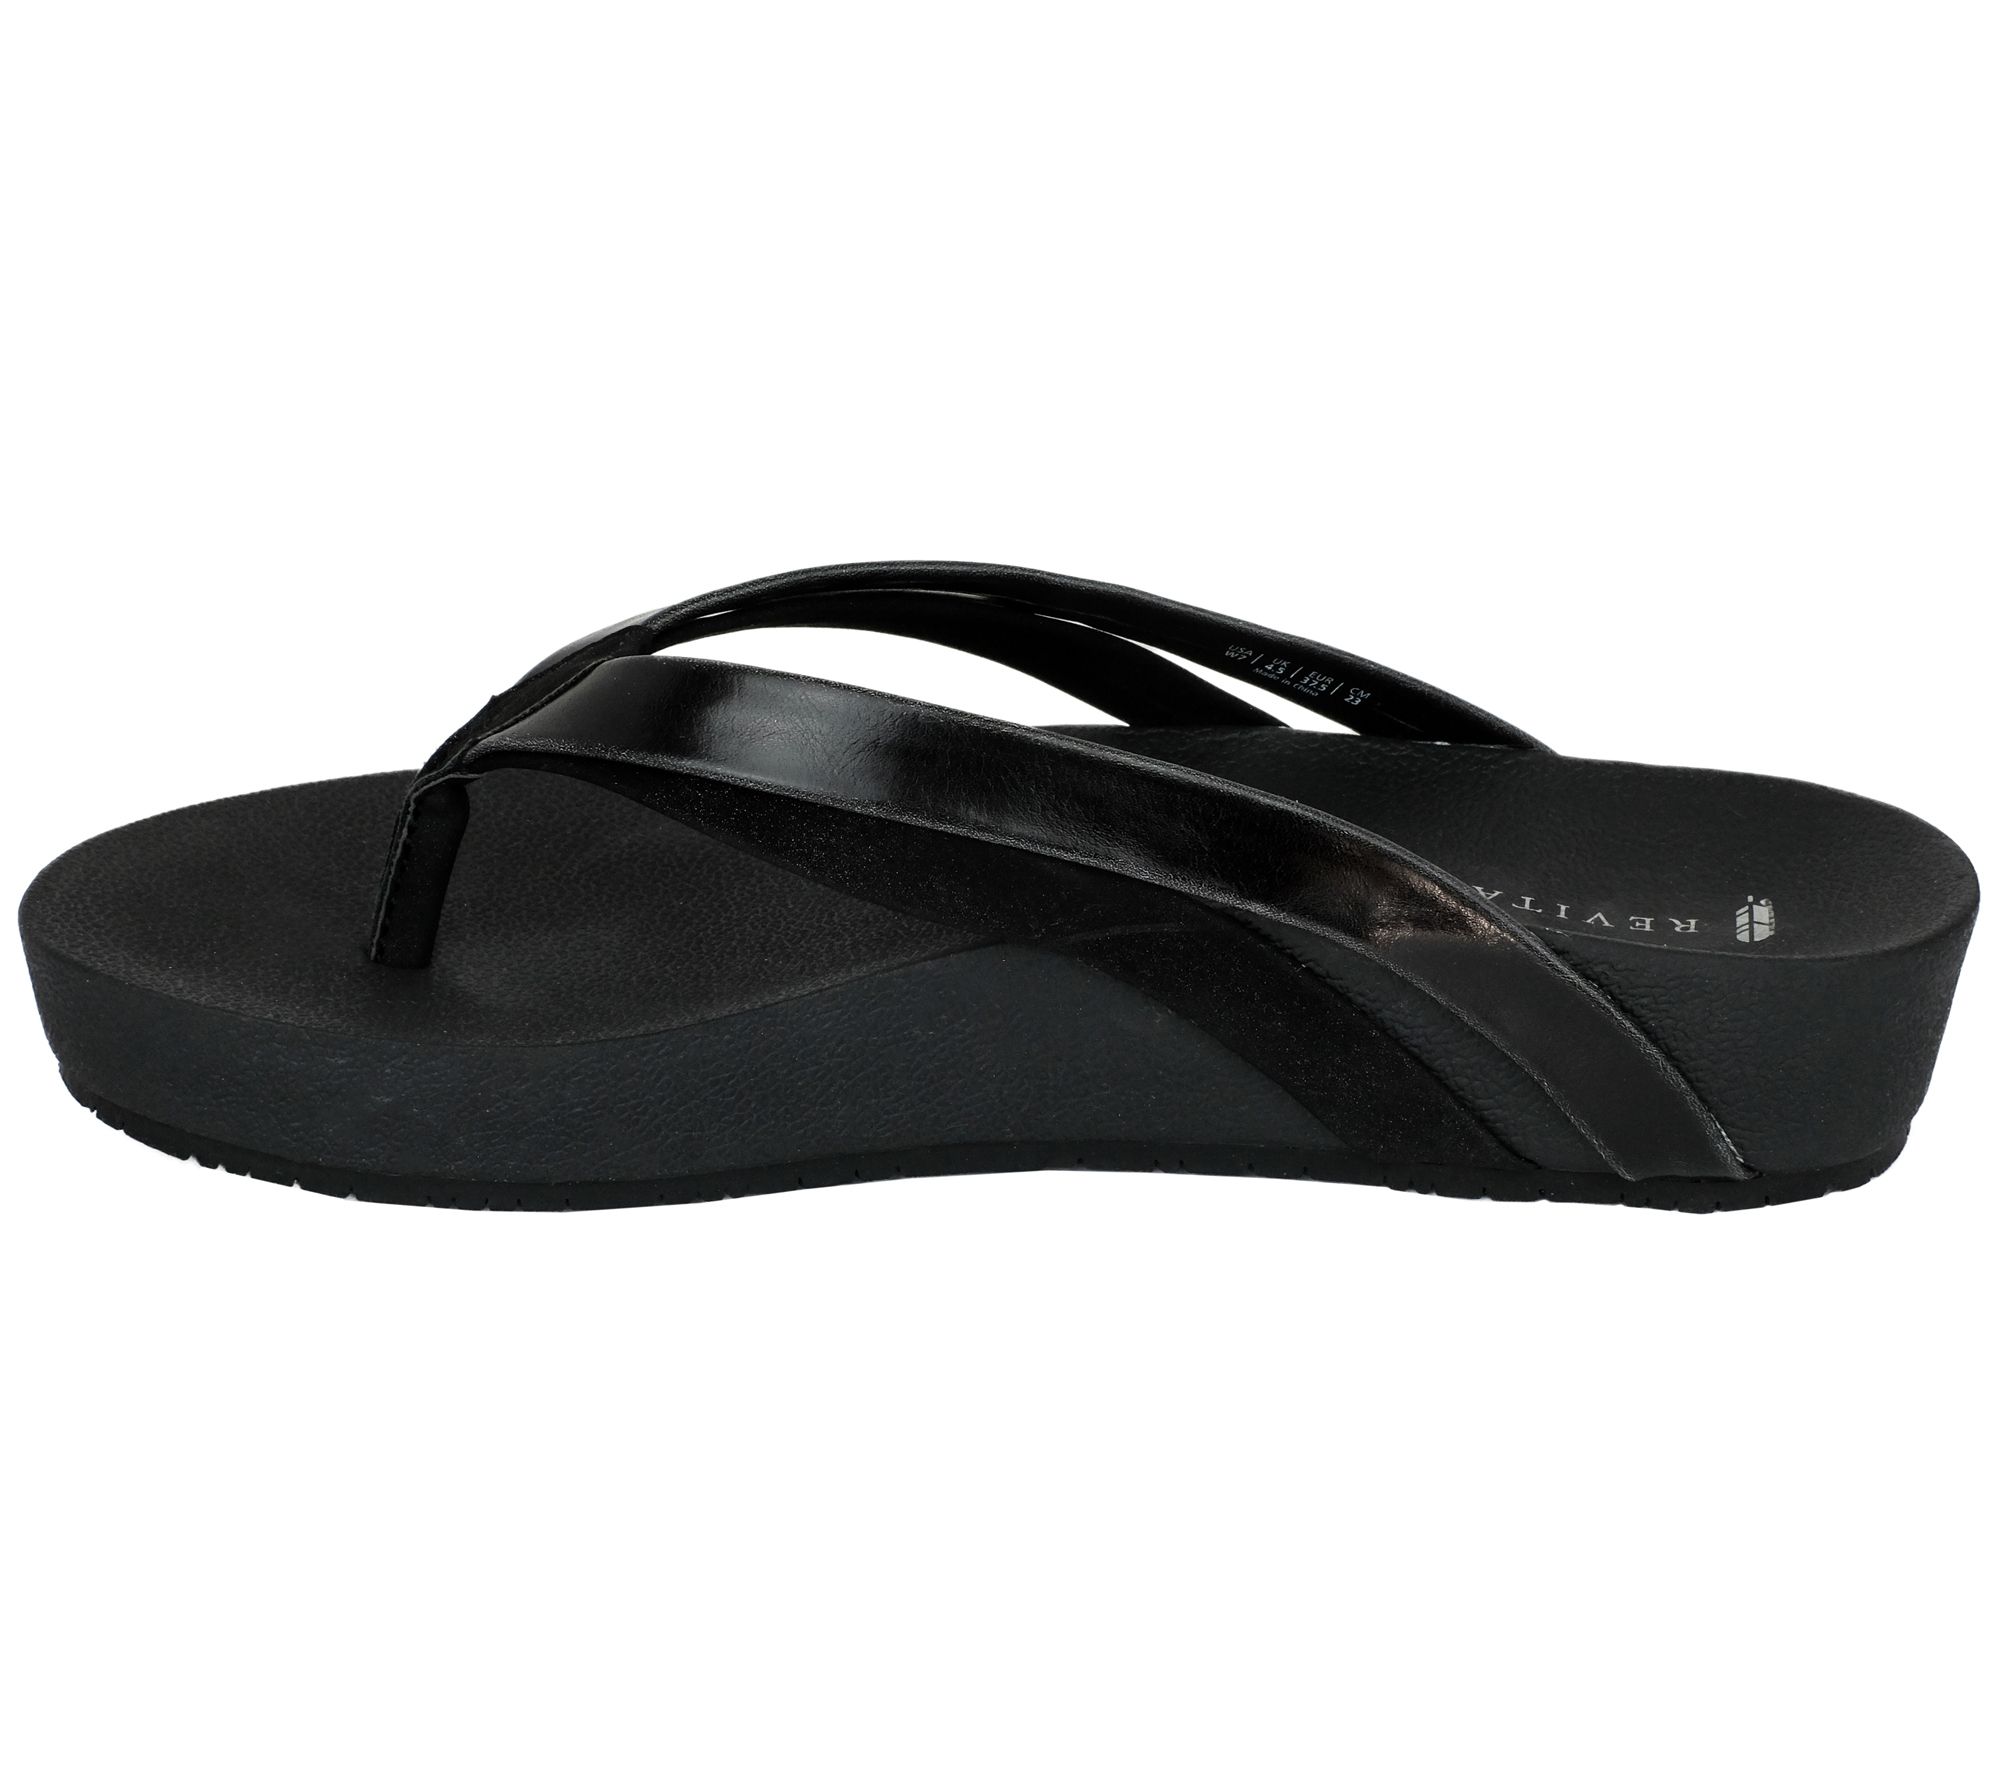 Revitalign Orthotic Flip Flop Sandals - Sandy Seas Beach - QVC.com